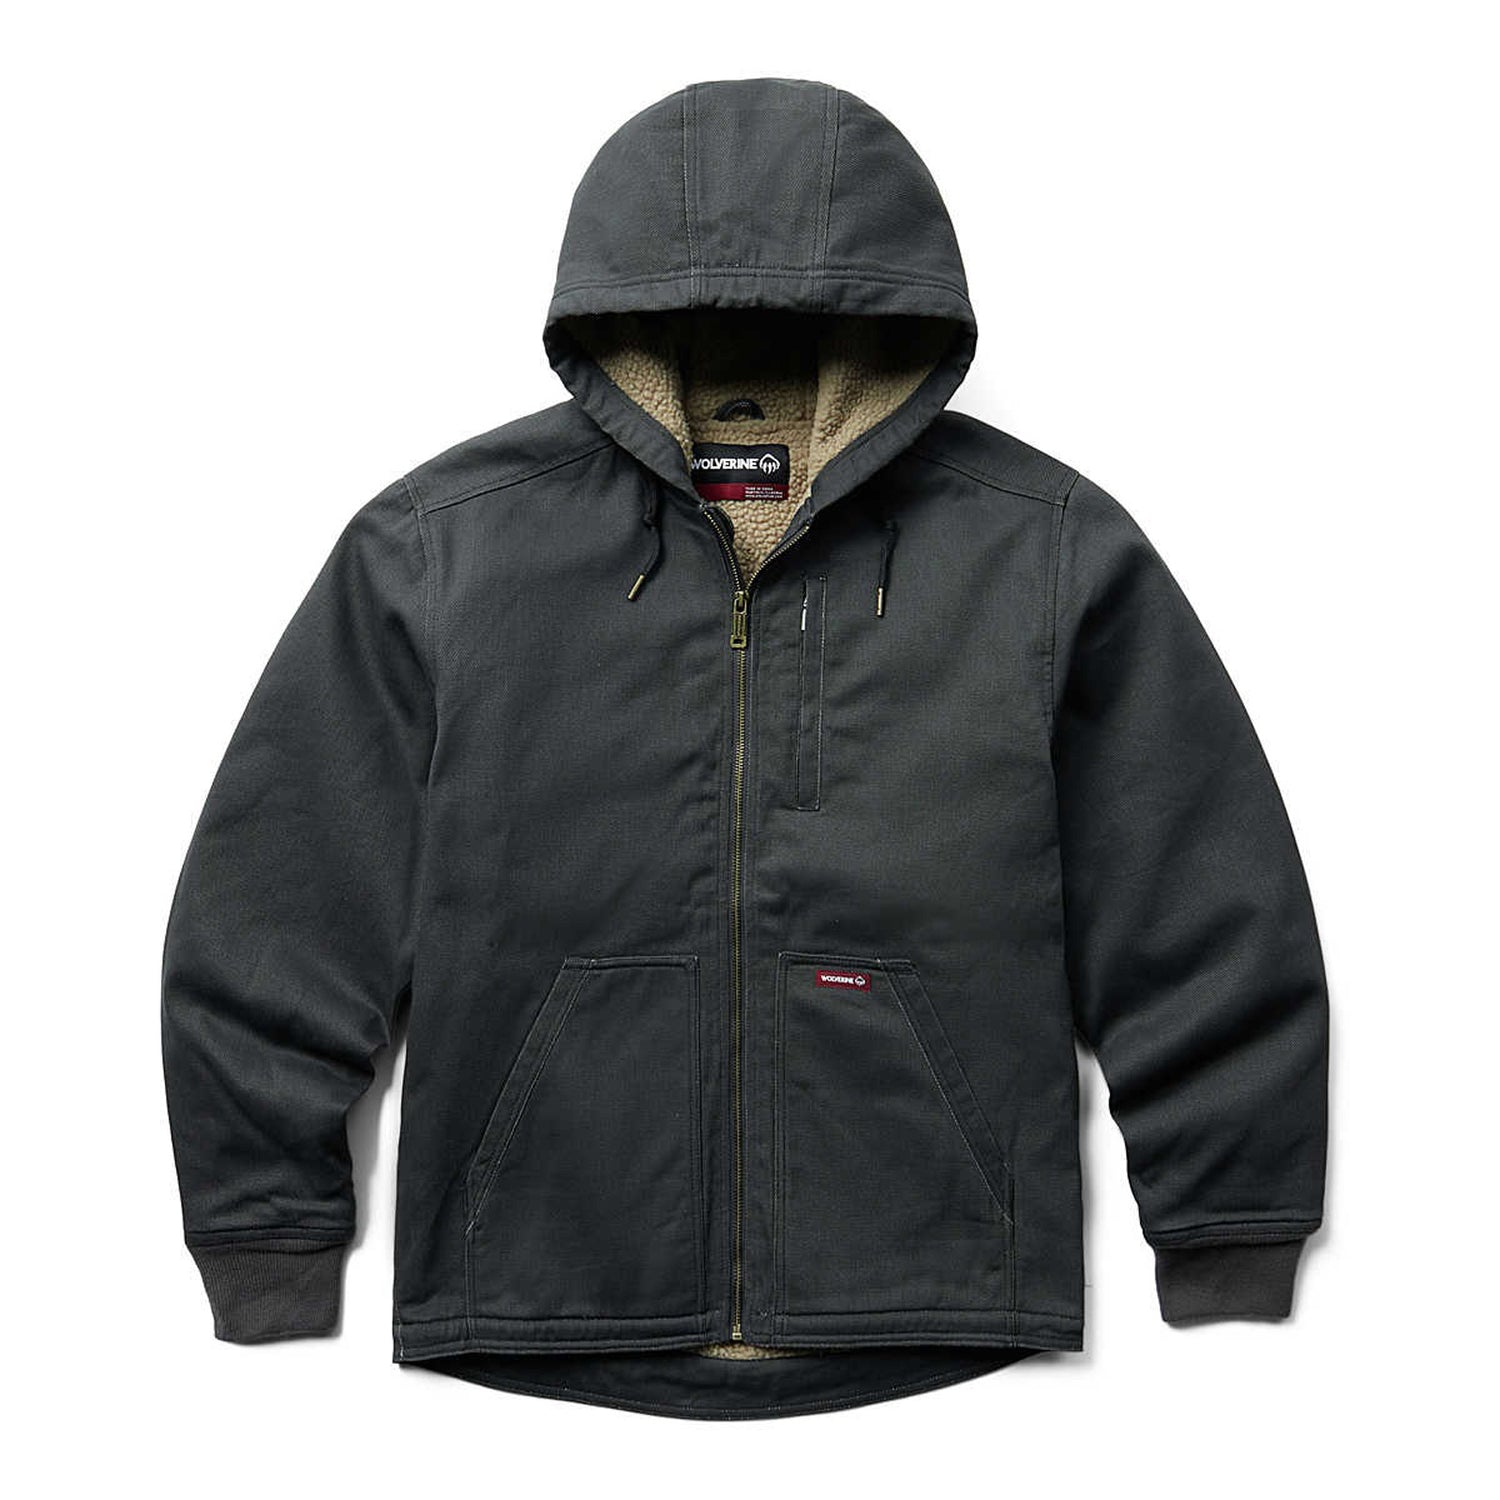 Peltz Shoes  Men's Wolverine Upland Sherpa Lined Hooded Jacket Black W1210270-003